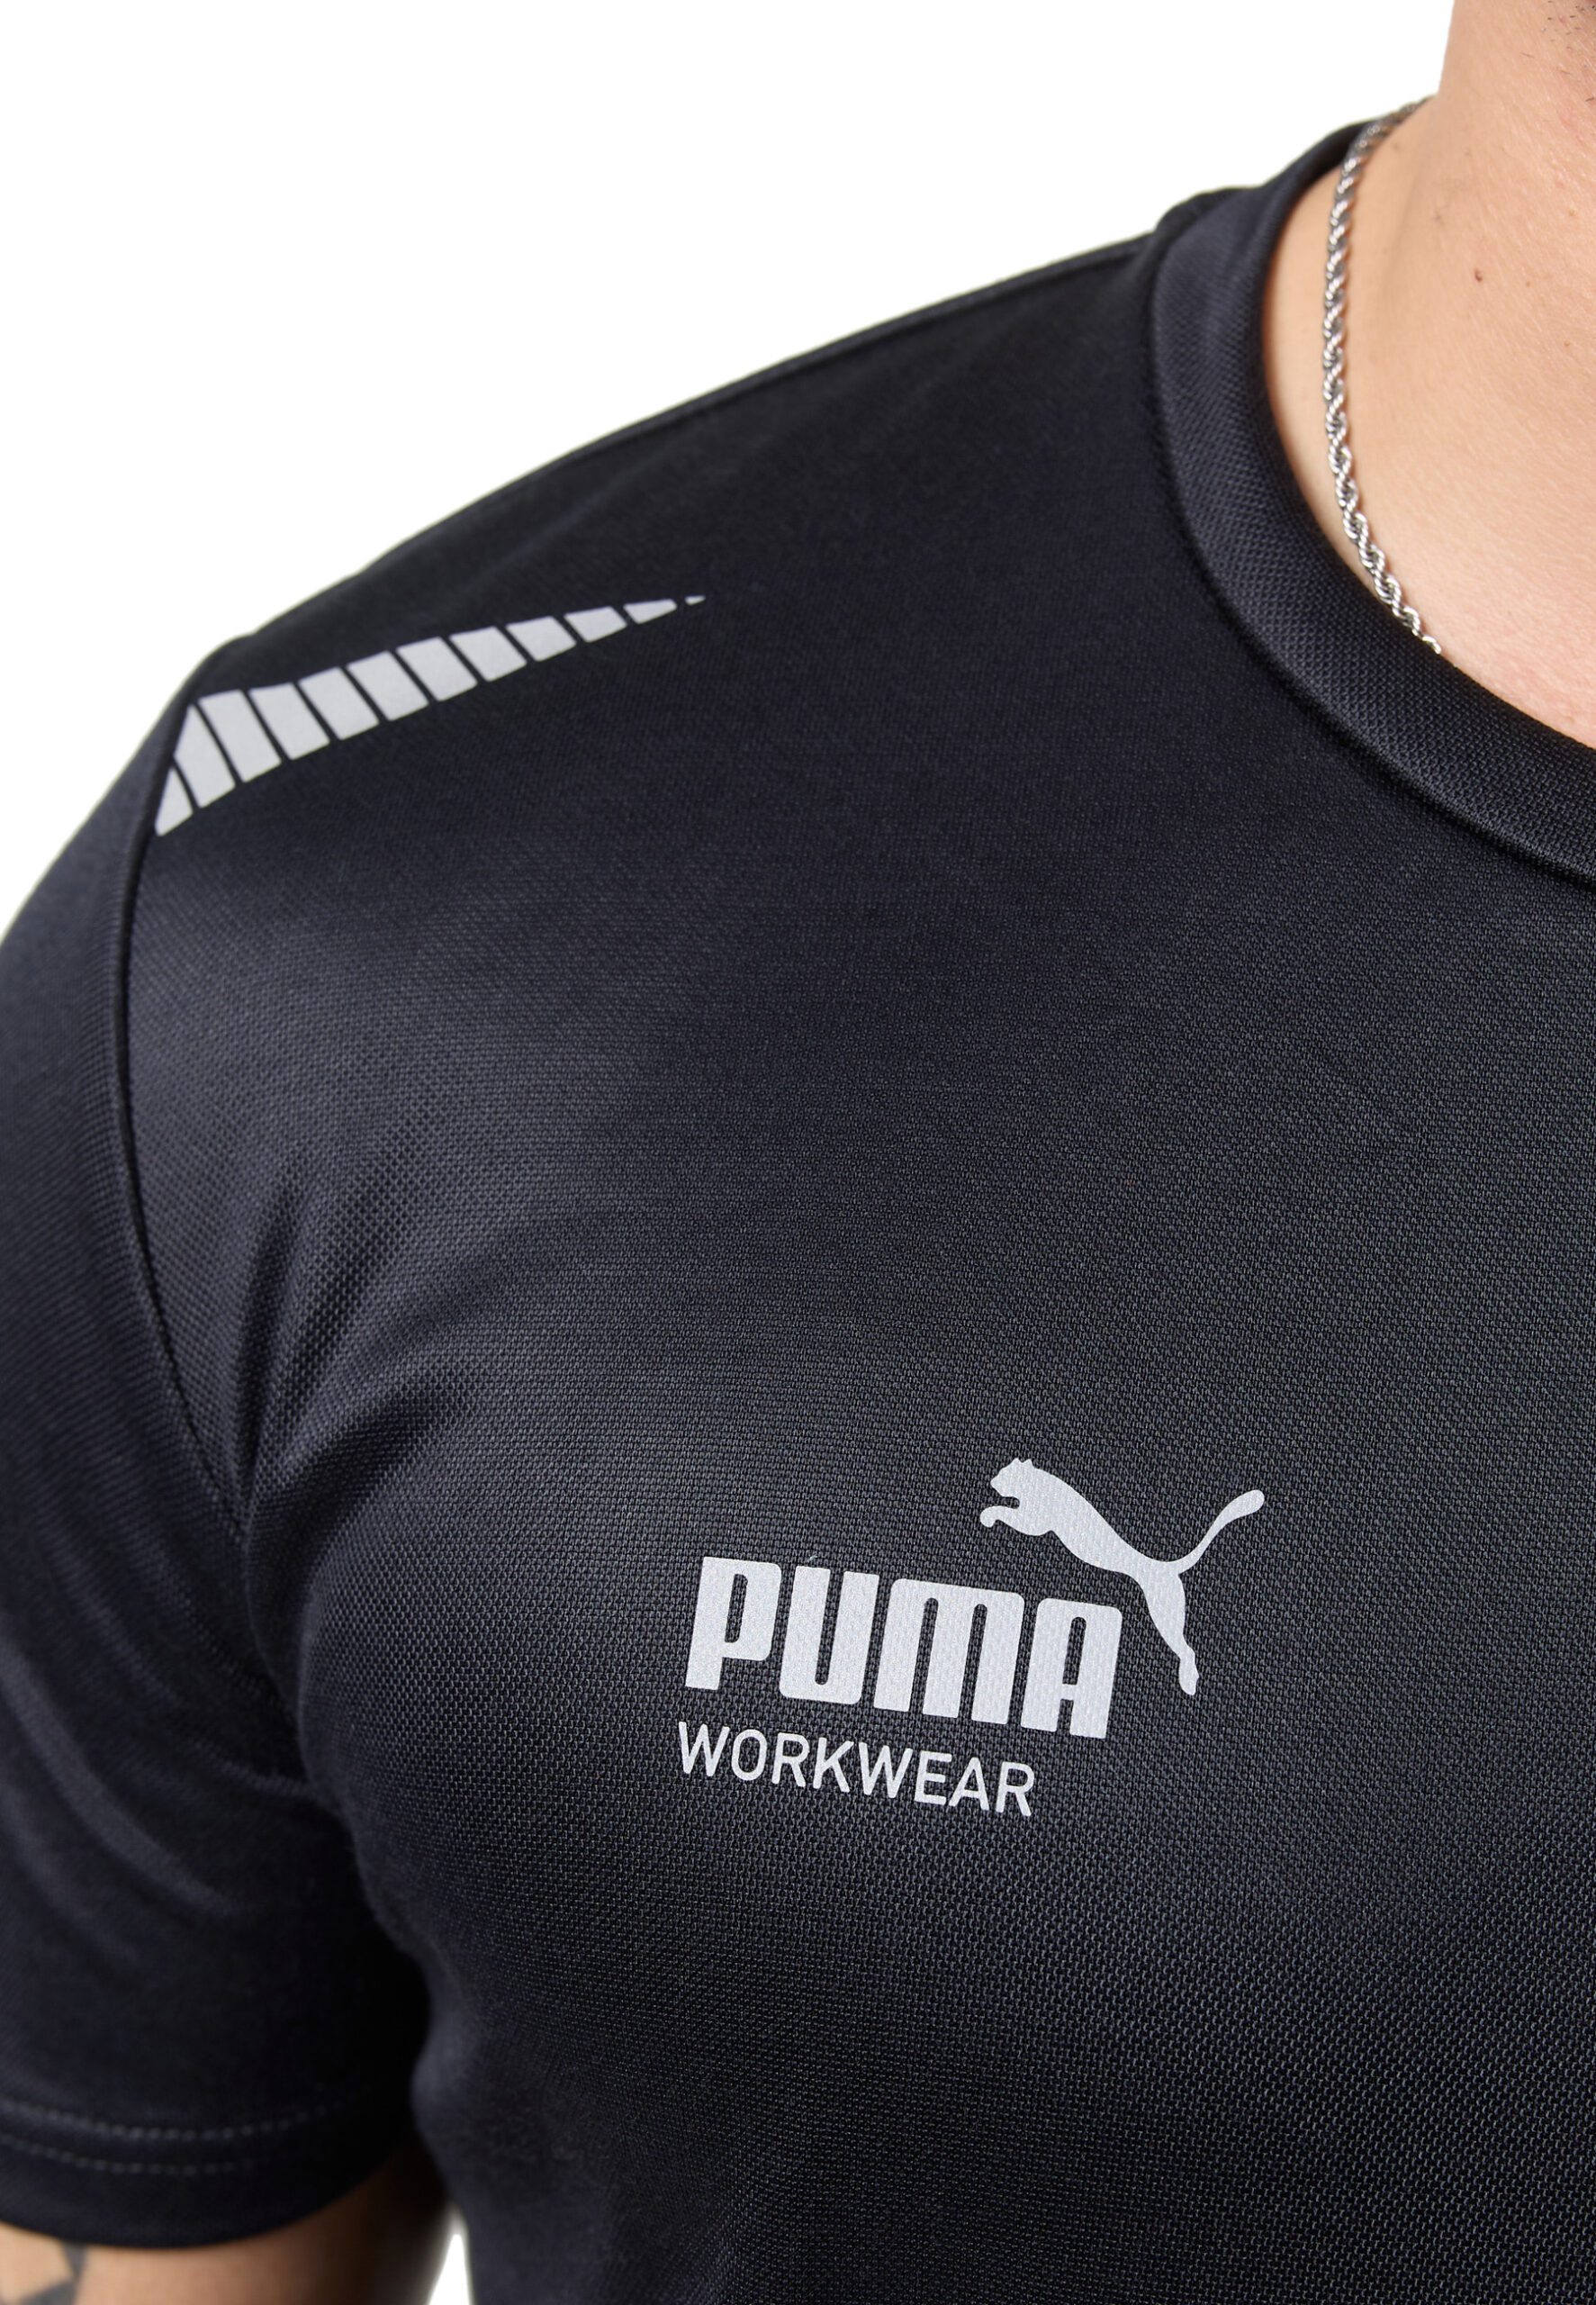 PUMA Workwear Essentials Men's T-Shirt